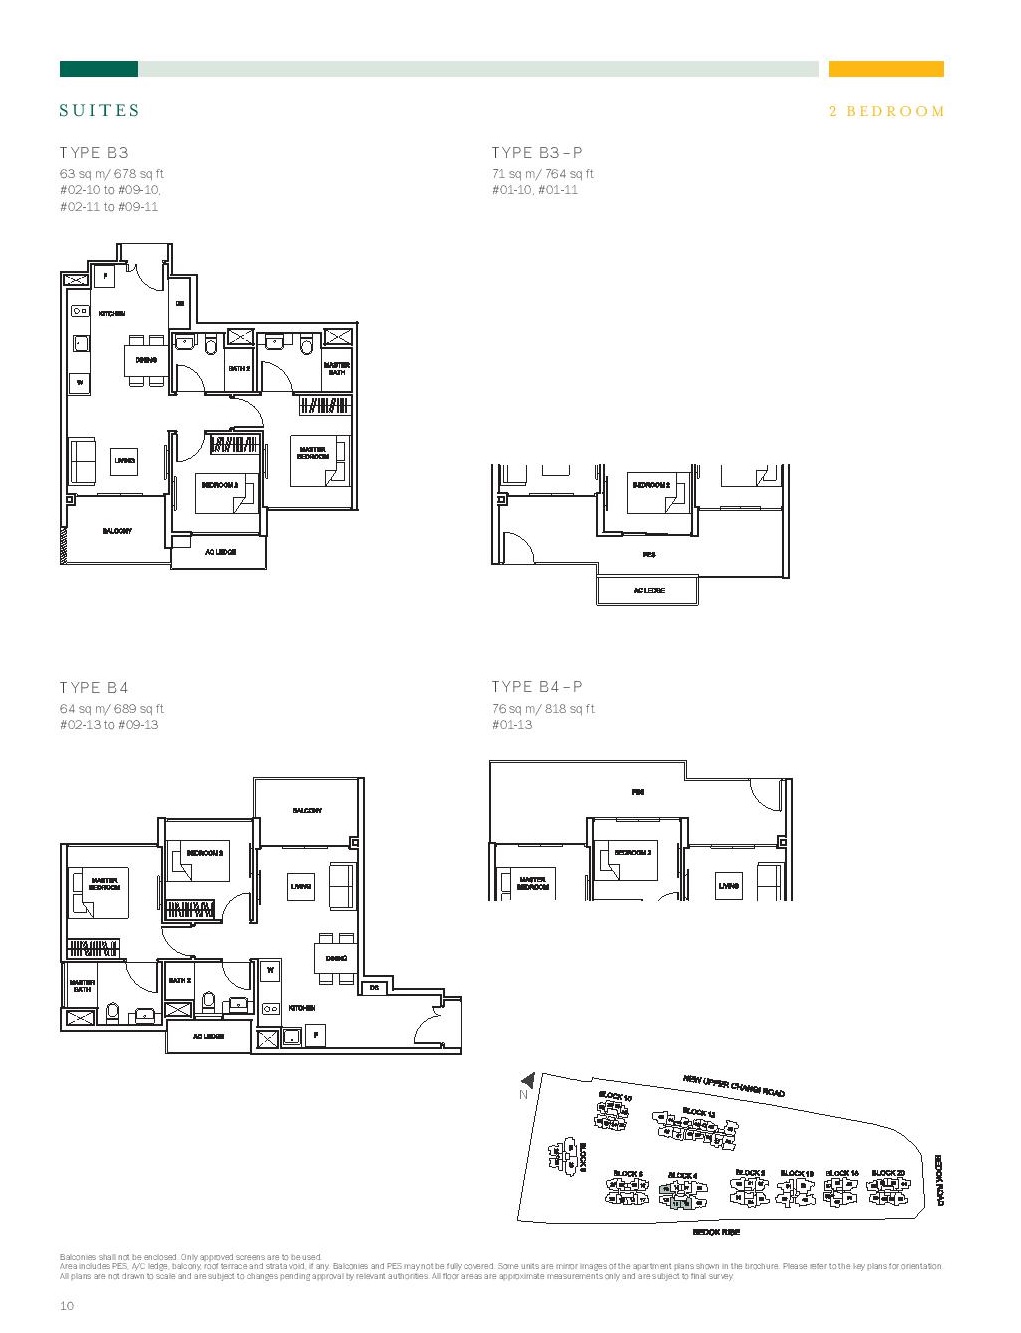 The Glades @ Tanah Merah 2 Bedroom Floor Type B3, B4, B3-P, B4-P Plans